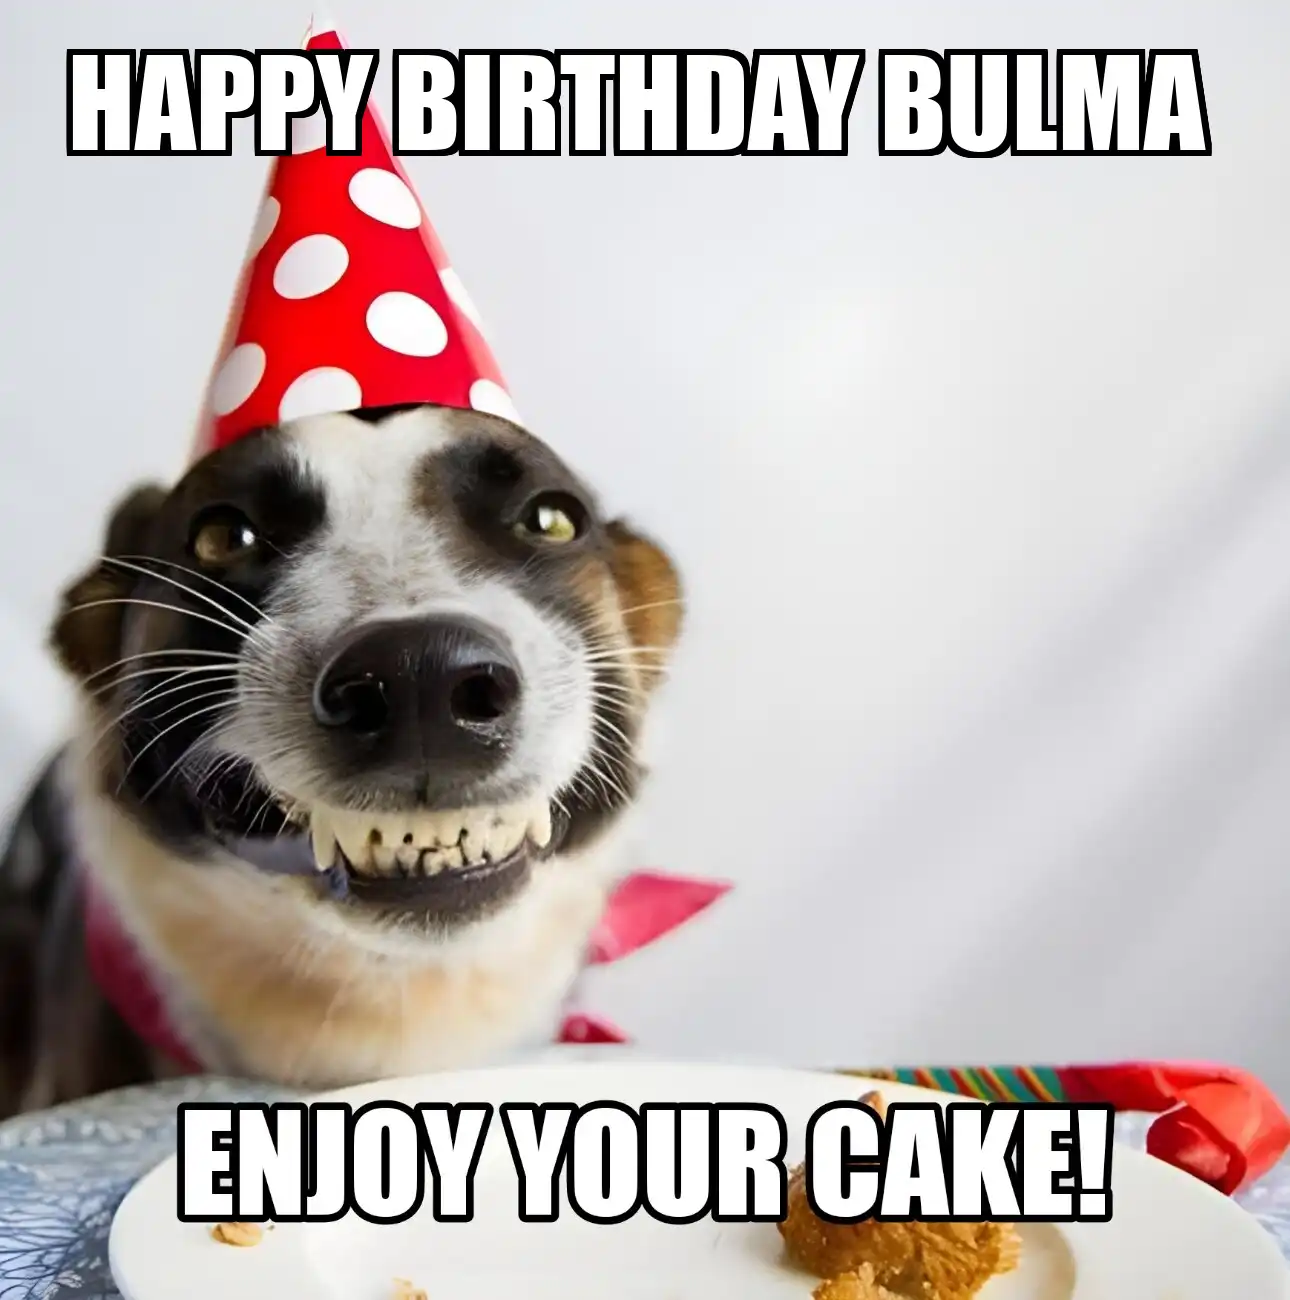 Happy Birthday Bulma Enjoy Your Cake Dog Meme